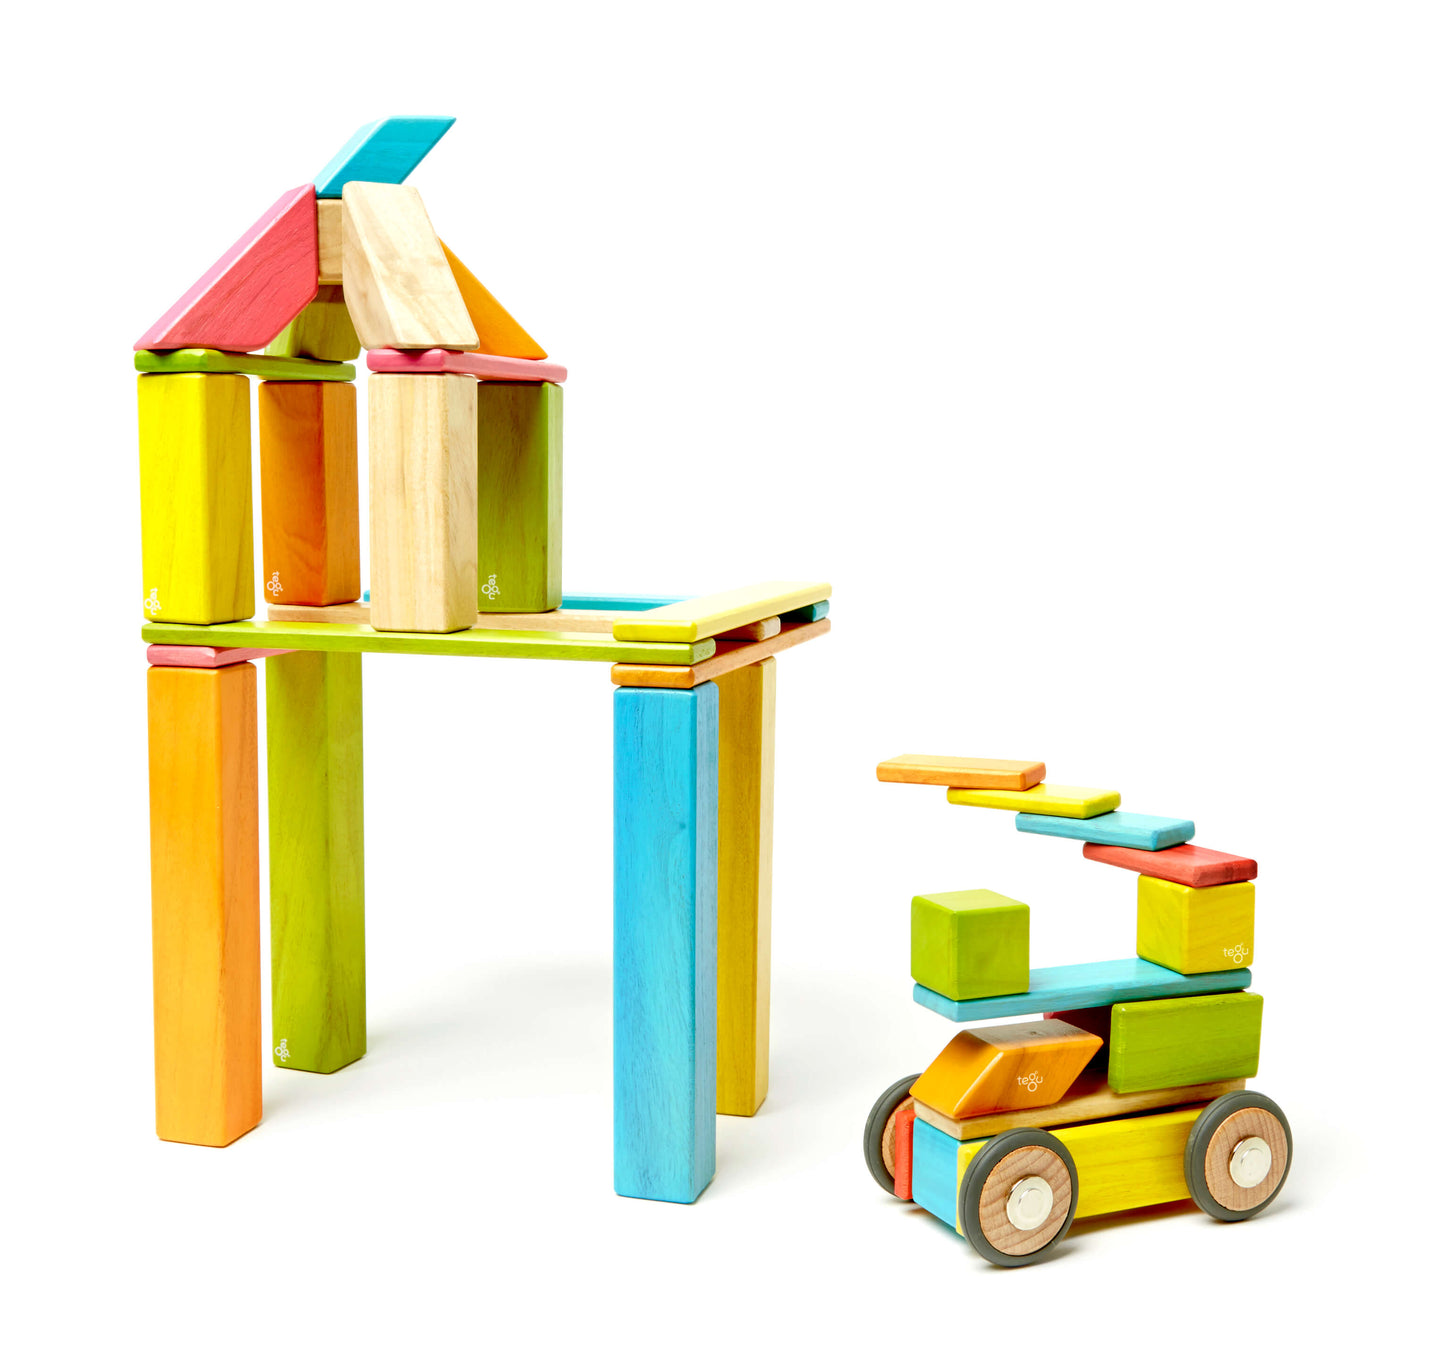 42 Piece Magnetic Wooden Building Blocks - STEM toys